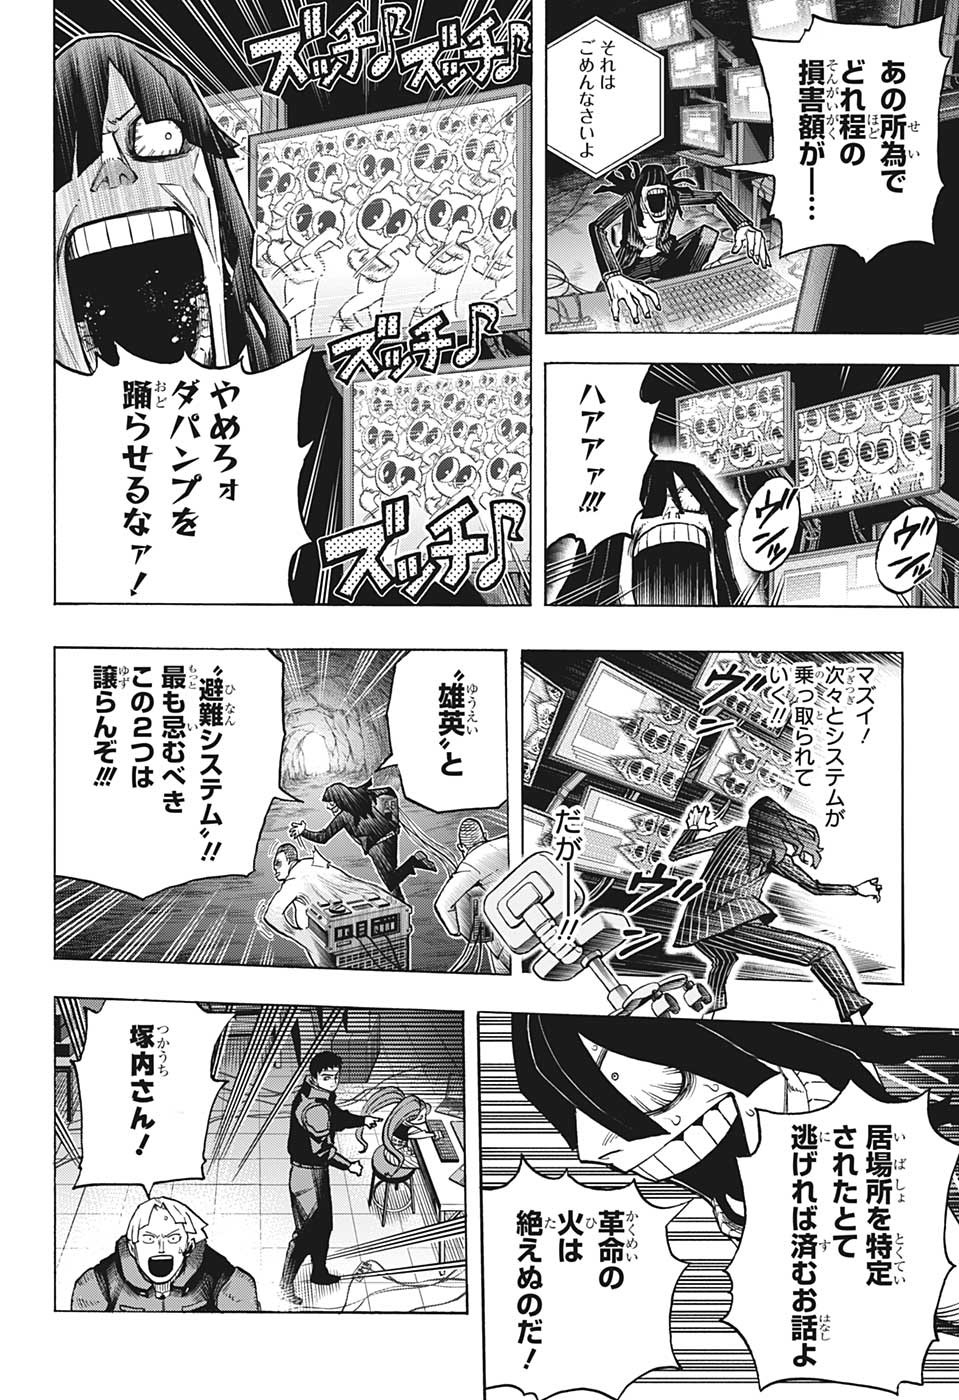 Boku no Hero Academia - Chapter 378 - Page 2